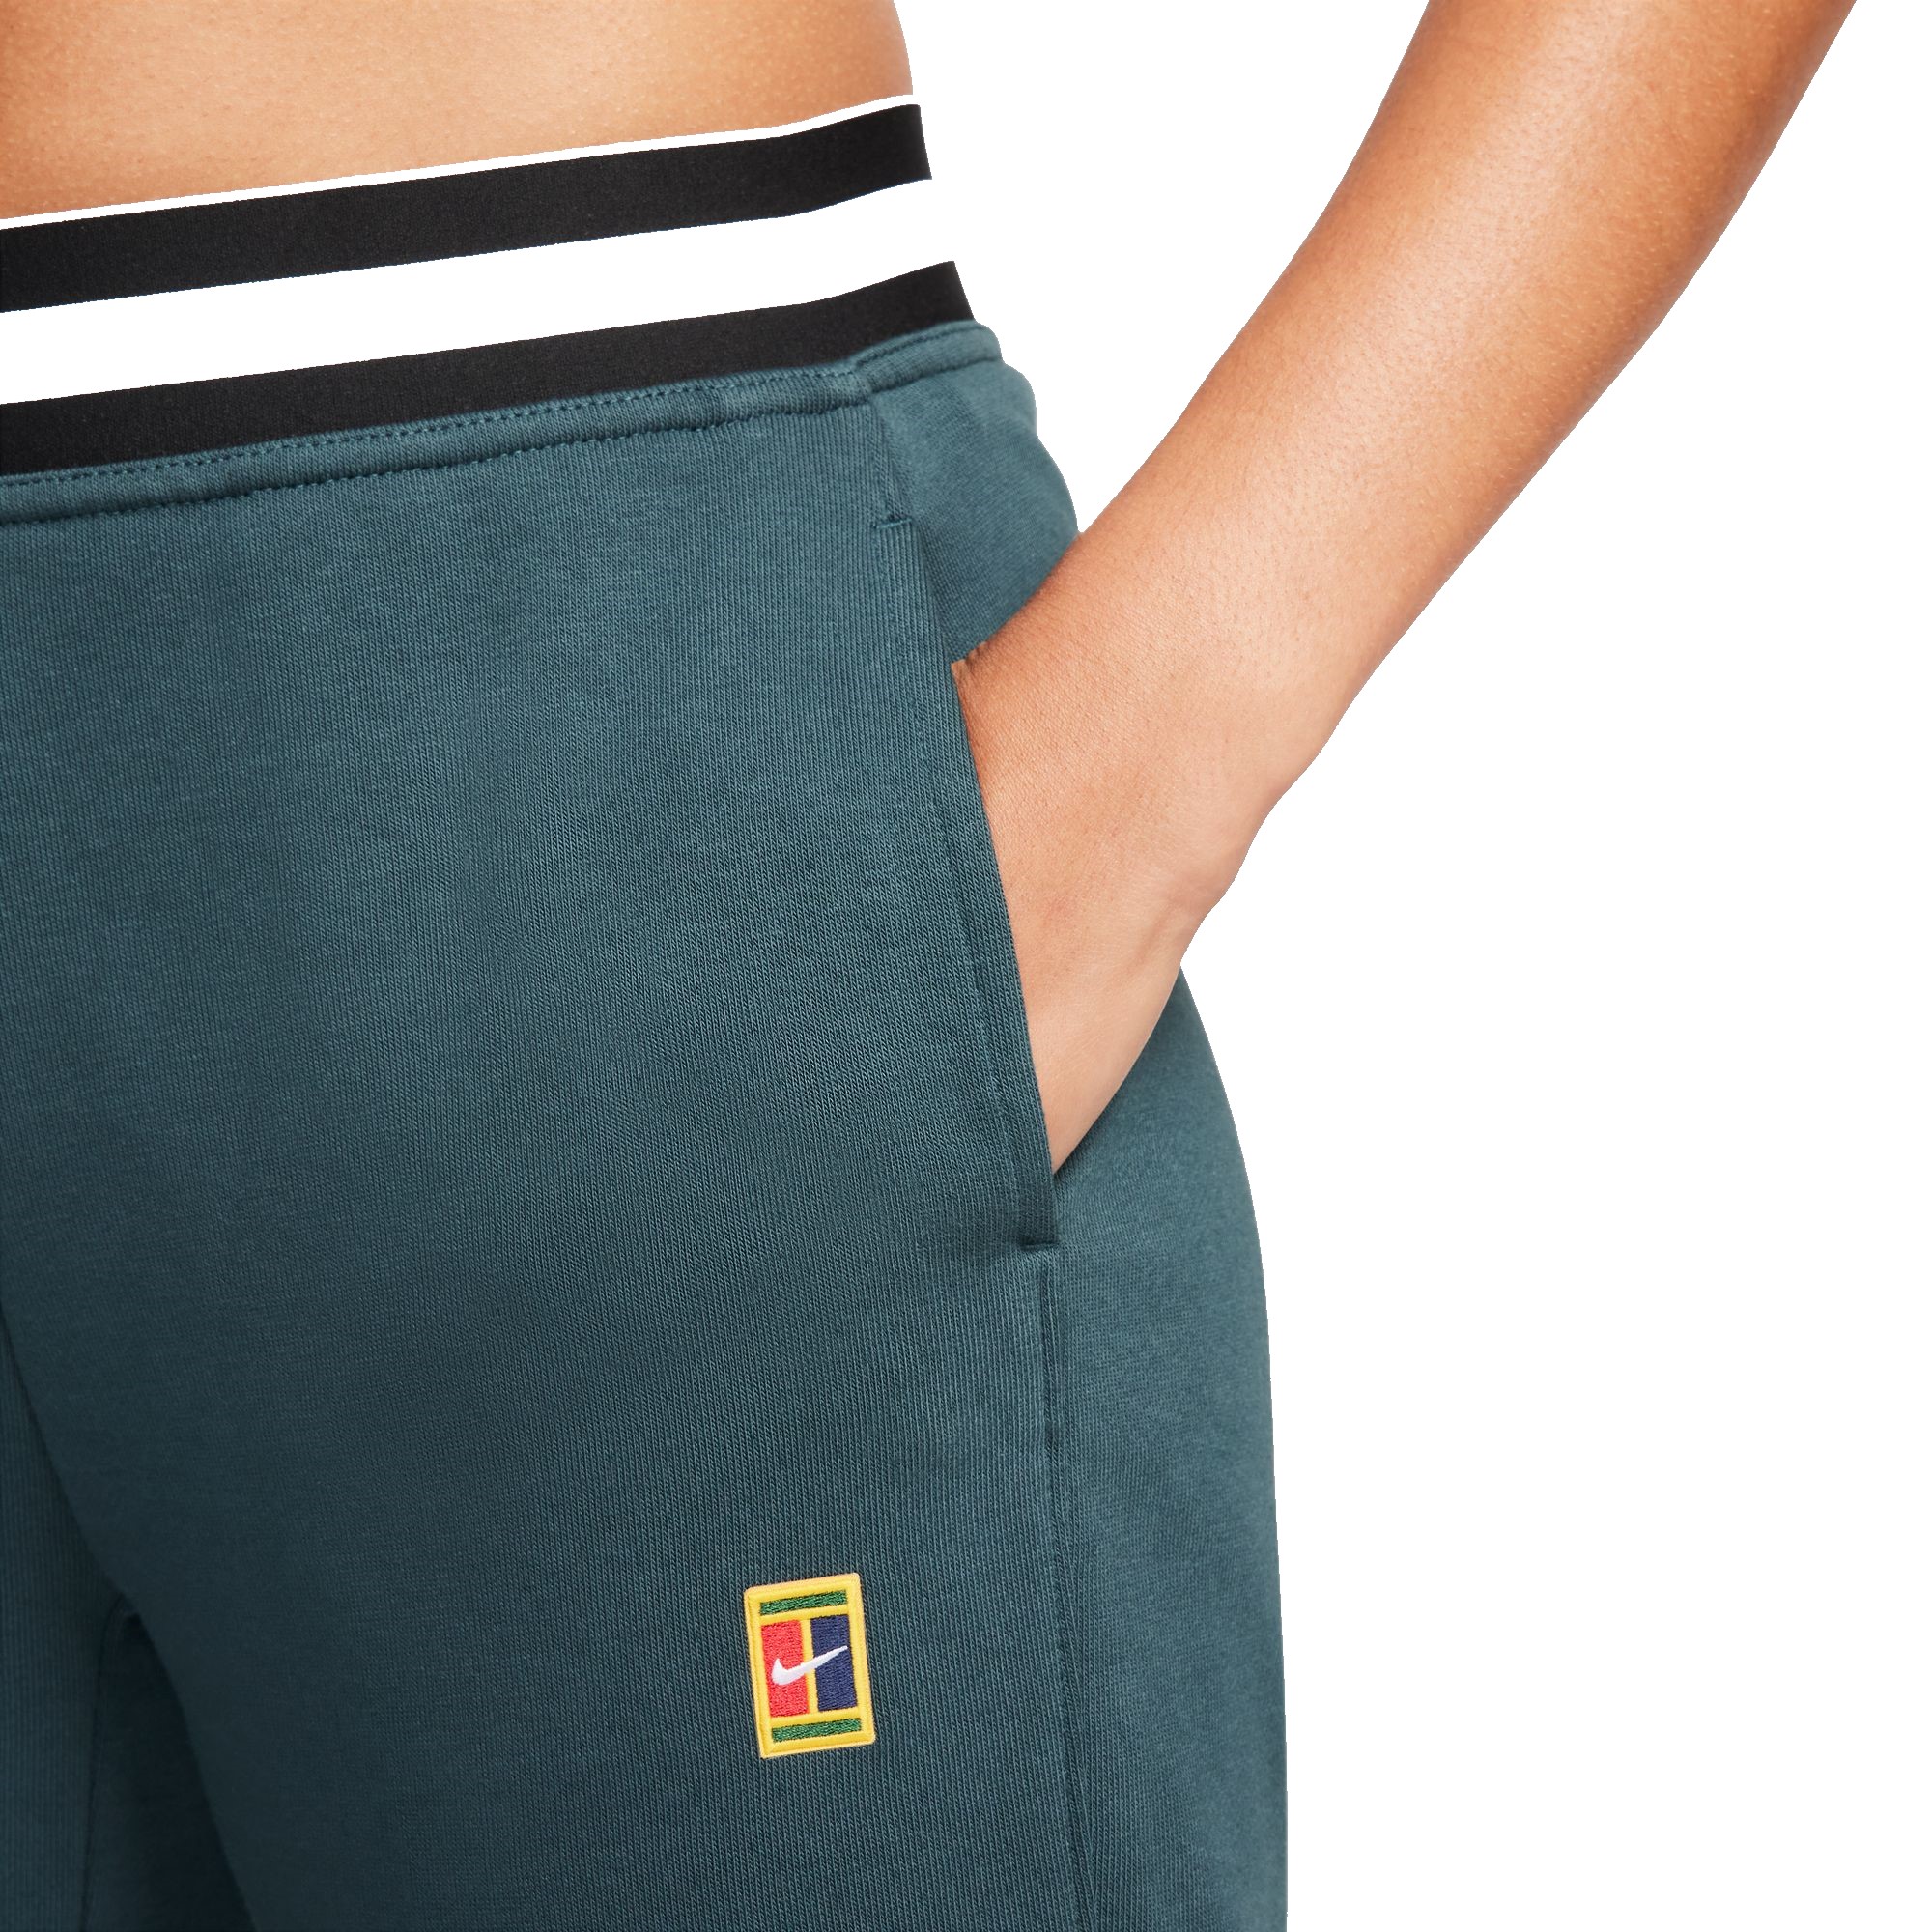 Women's trousers Nike Dri-Fit Heritage Core Fleece Pant - deep jungle, Tennis Zone